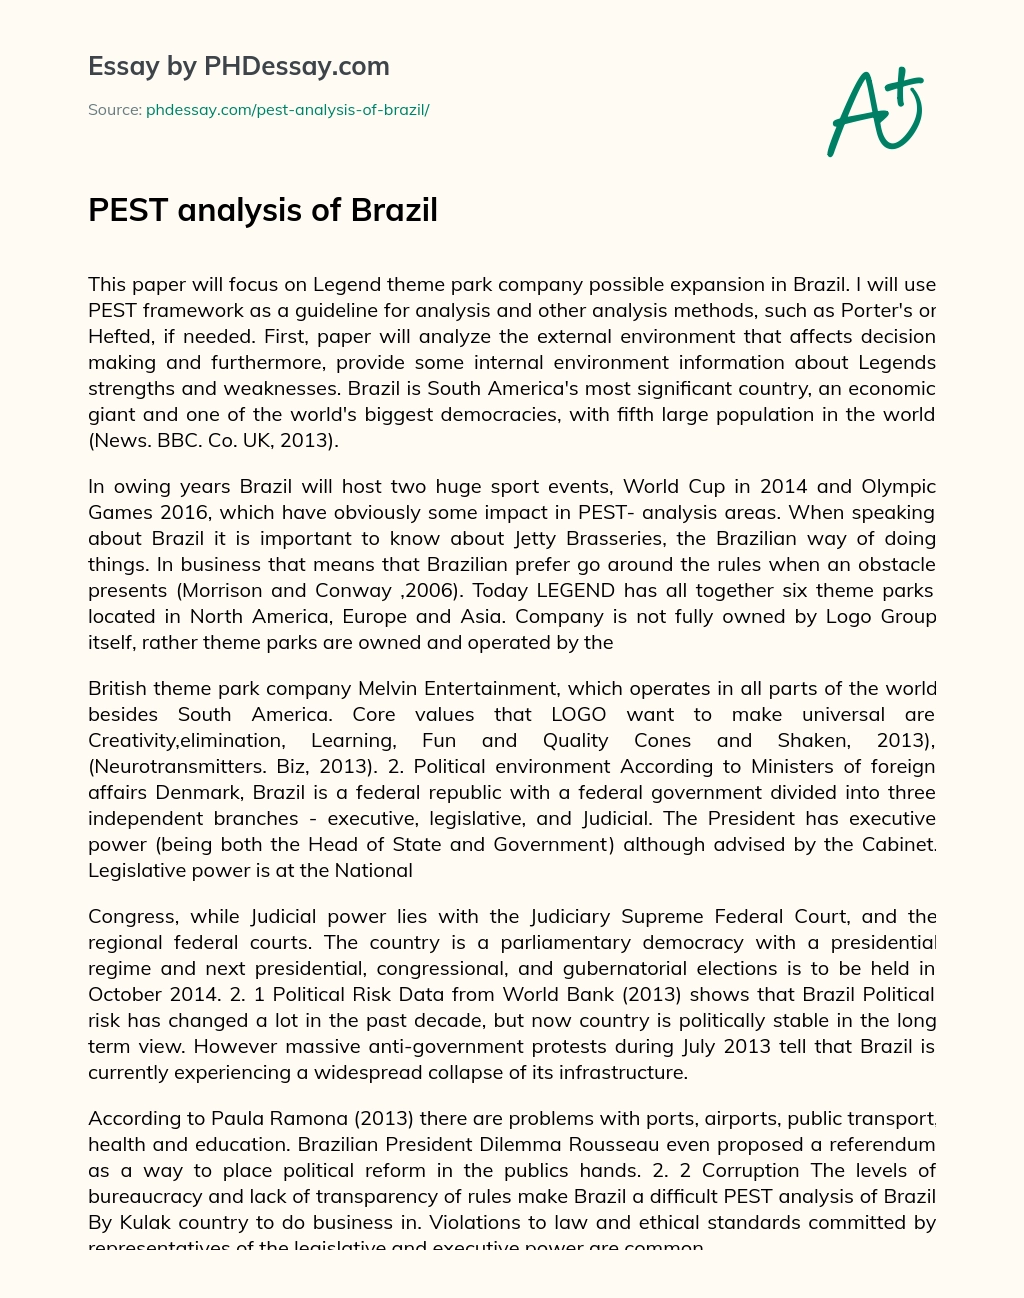 PEST analysis of Brazil essay